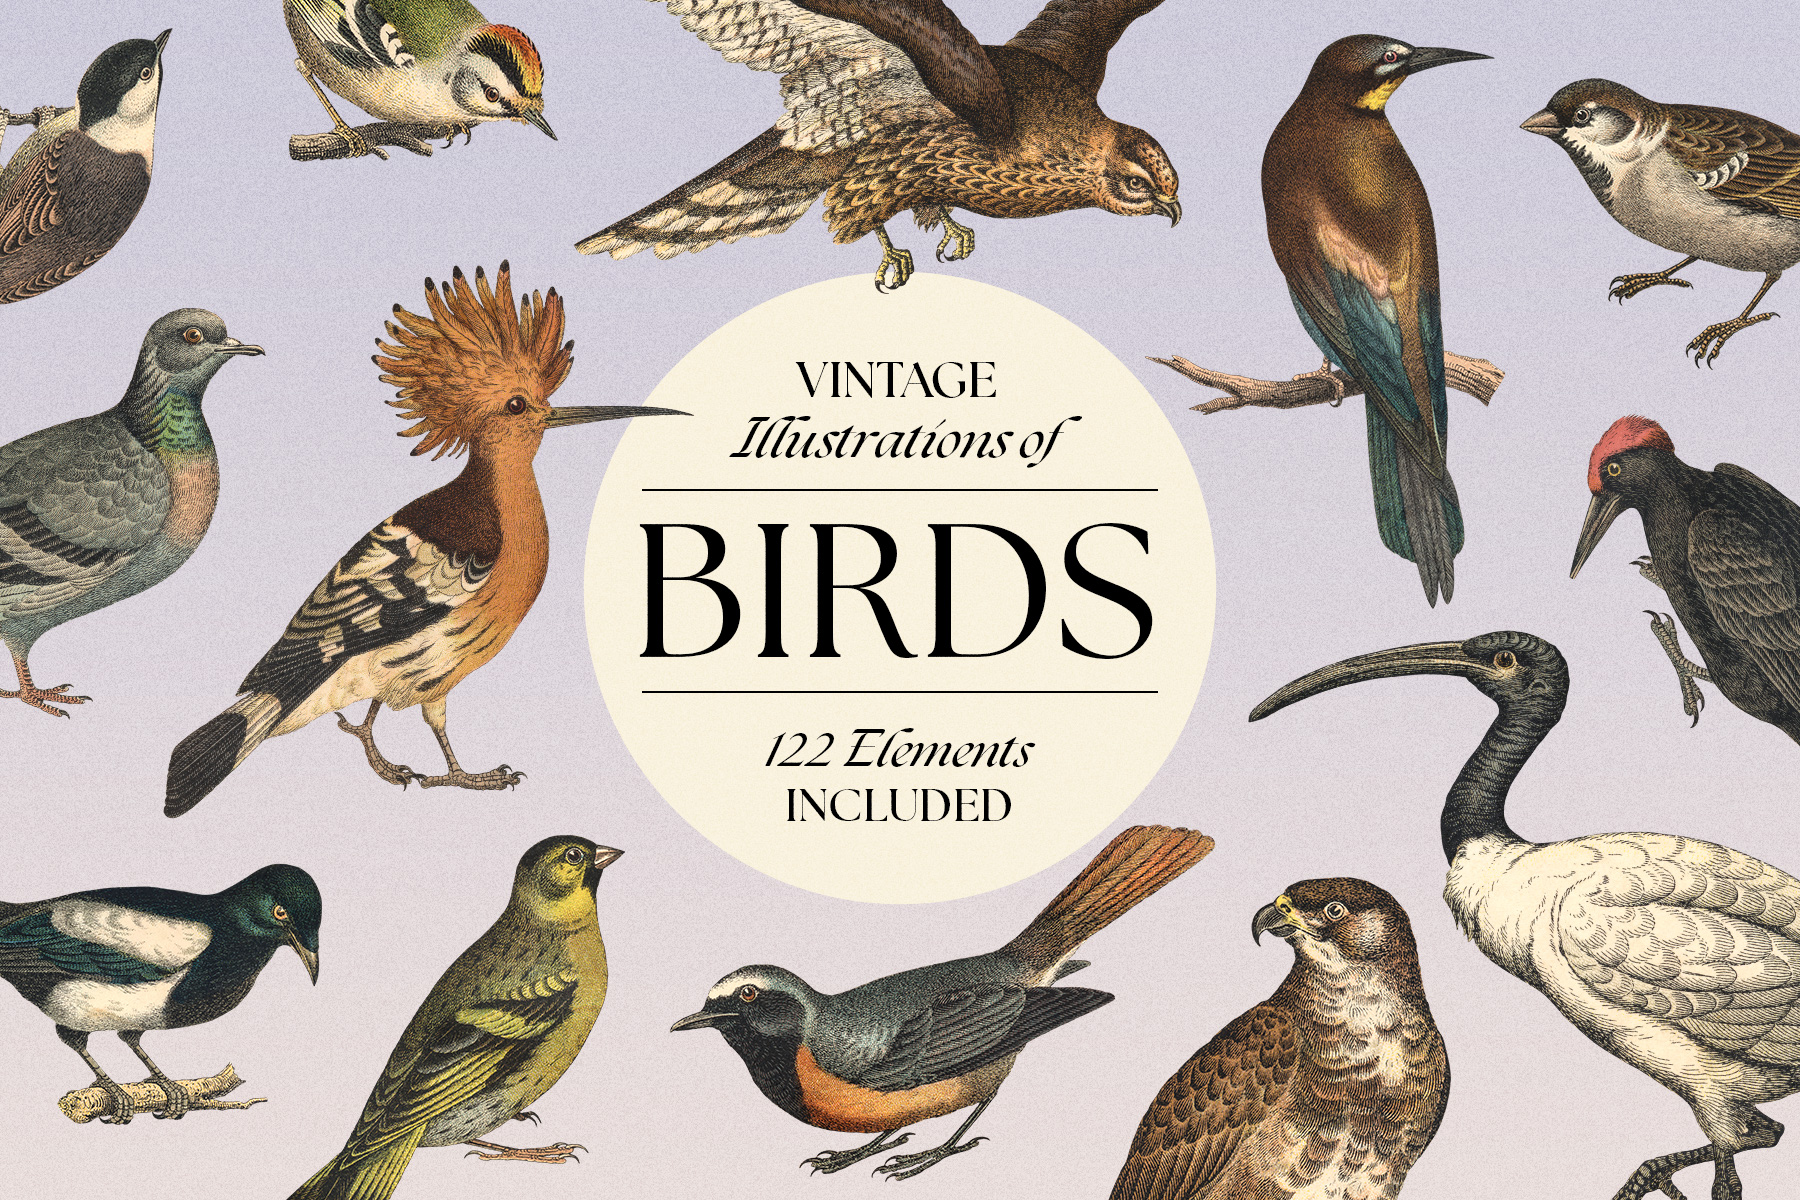 Vintage Bird Illustrations preview 01